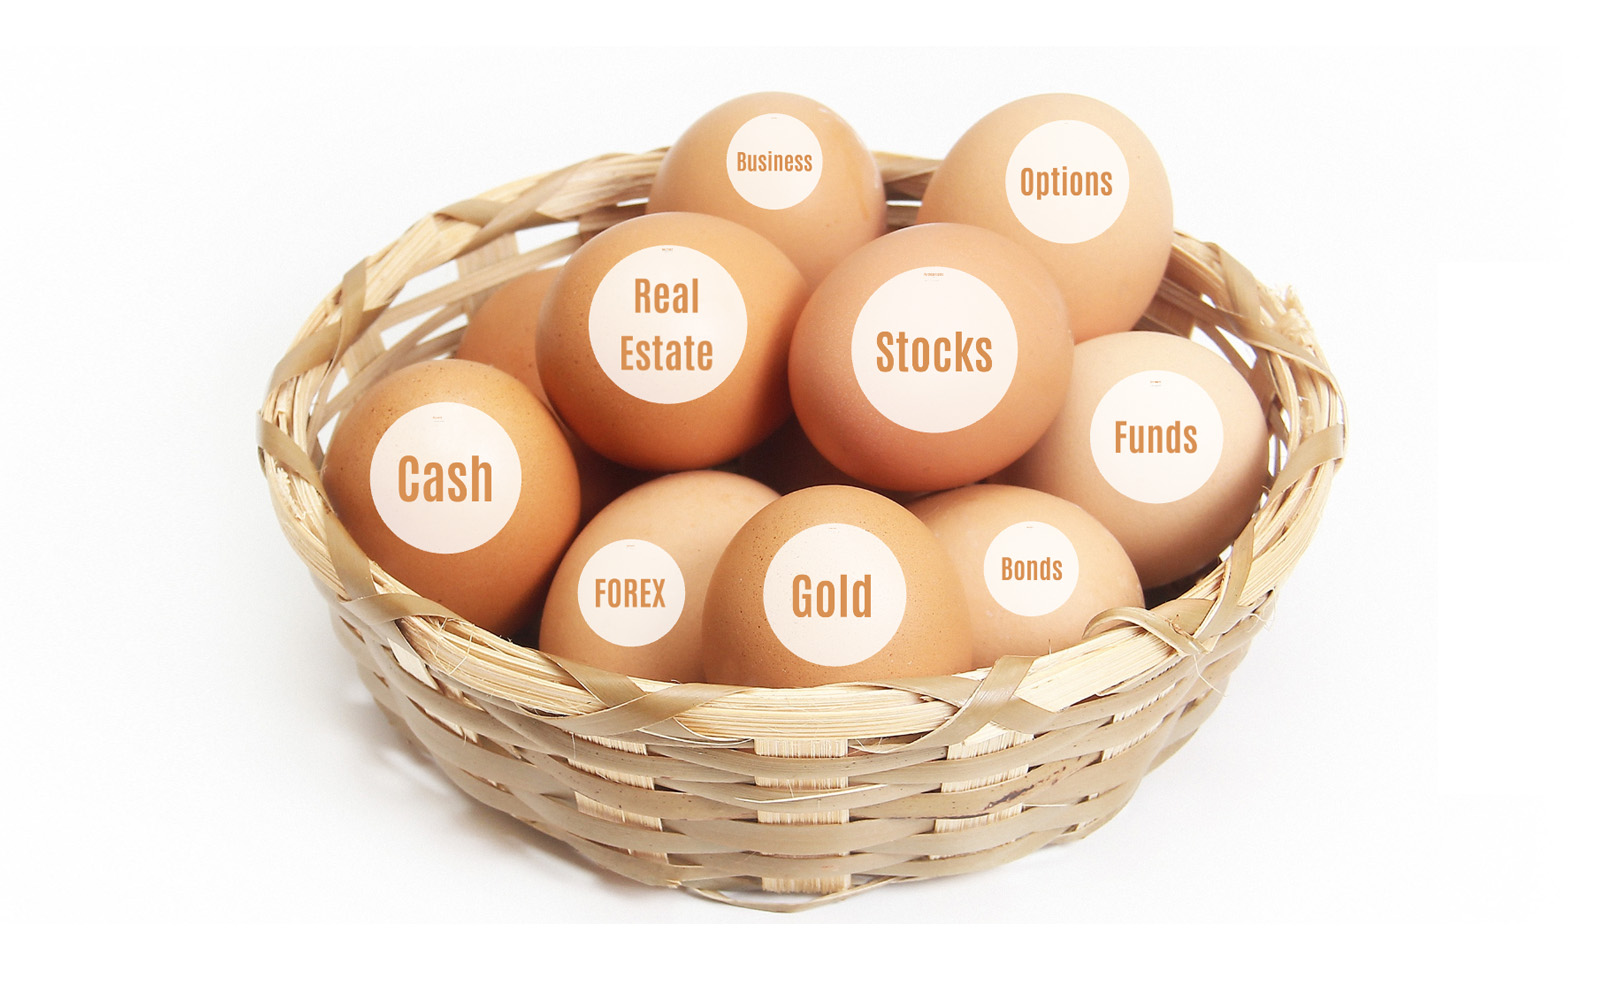 Investing Prezi template eggs in one basket rule